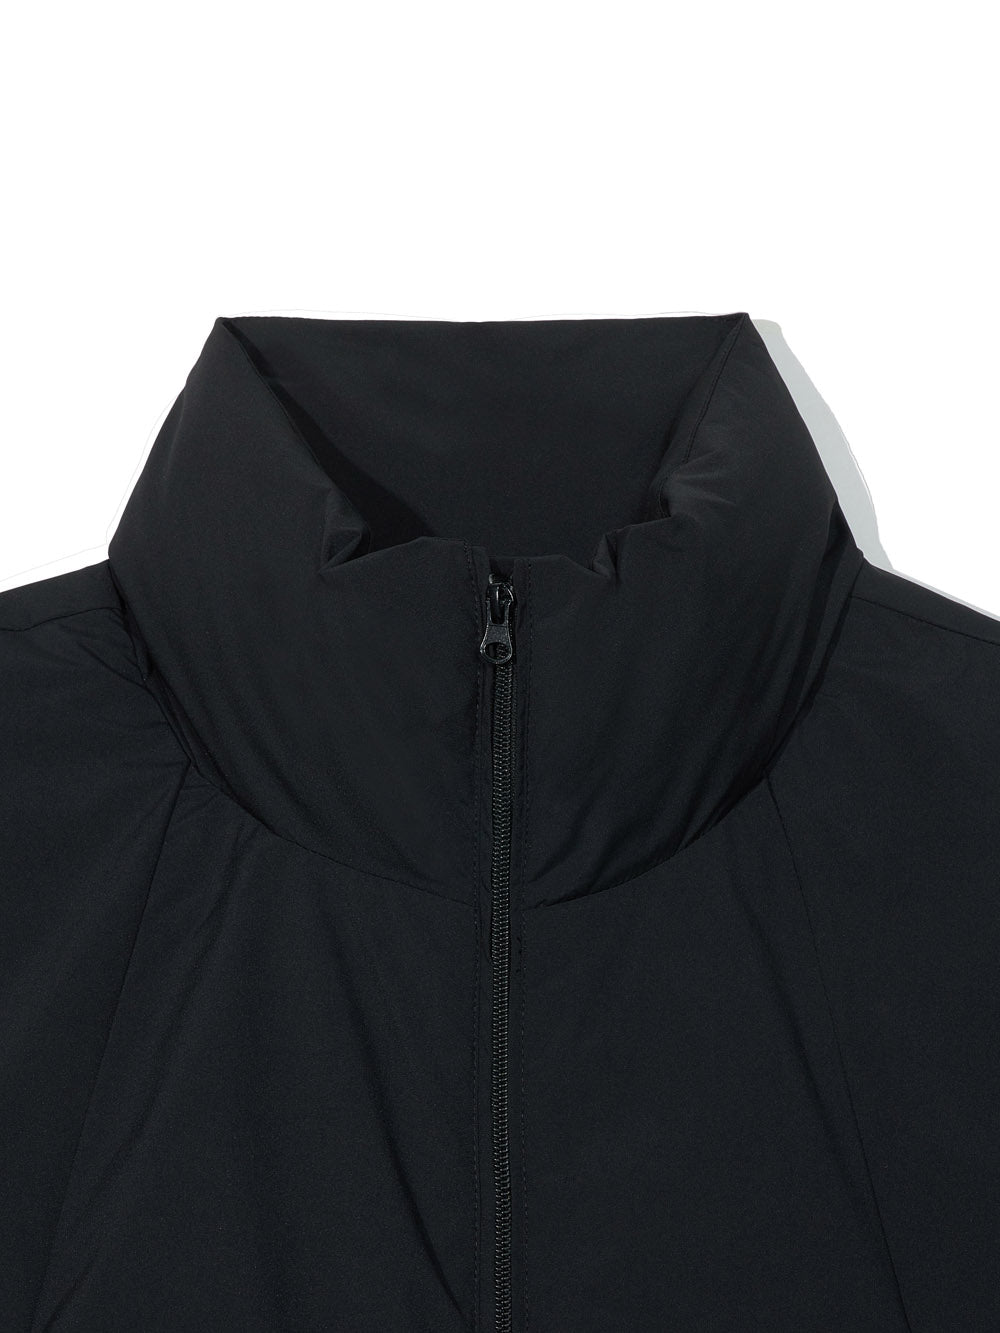 3M Thinsulate Featherless Short Padding Jacket in Black